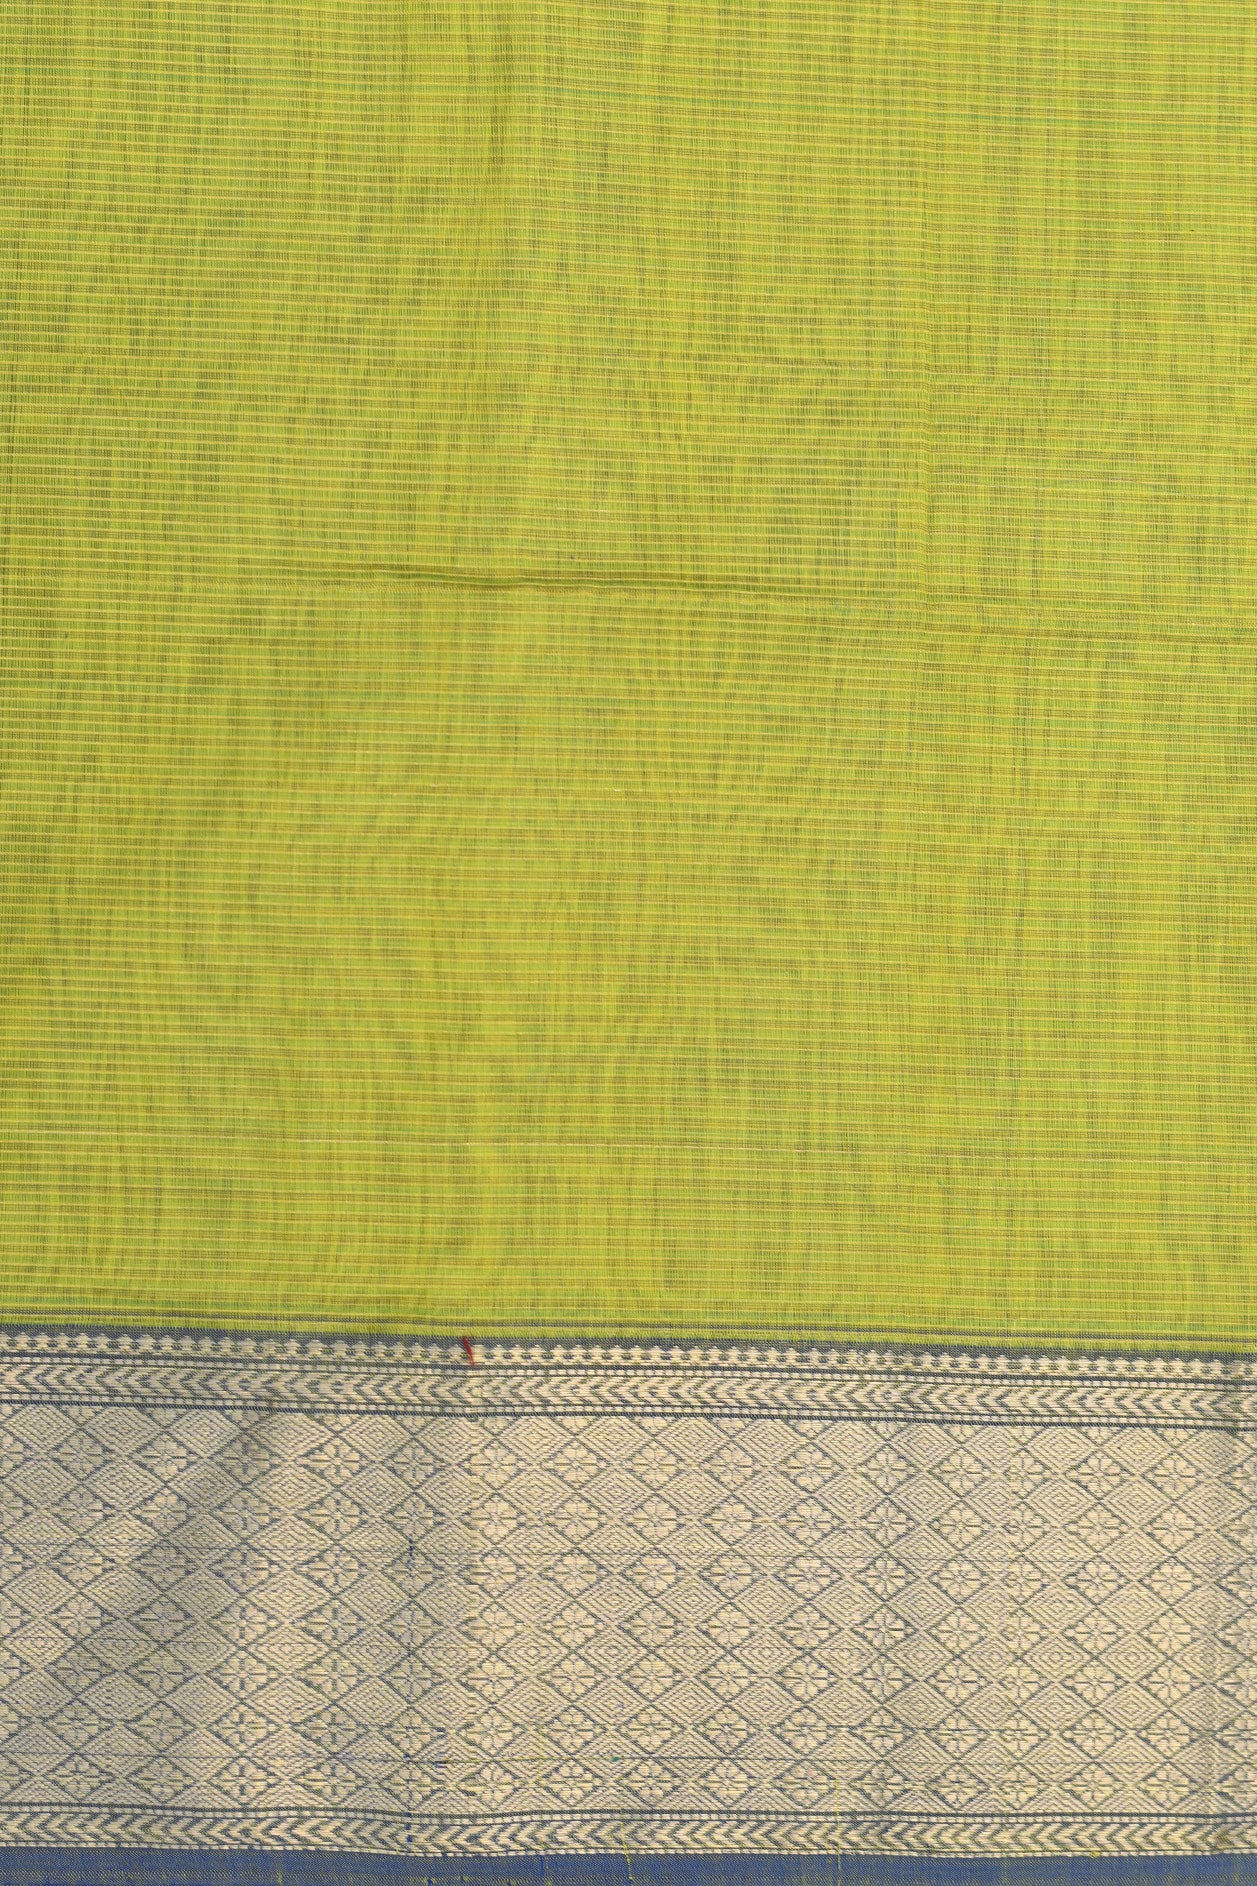 Big Contrast Zari Border In Stripes Lime Green Maheswari Silk Cotton Saree